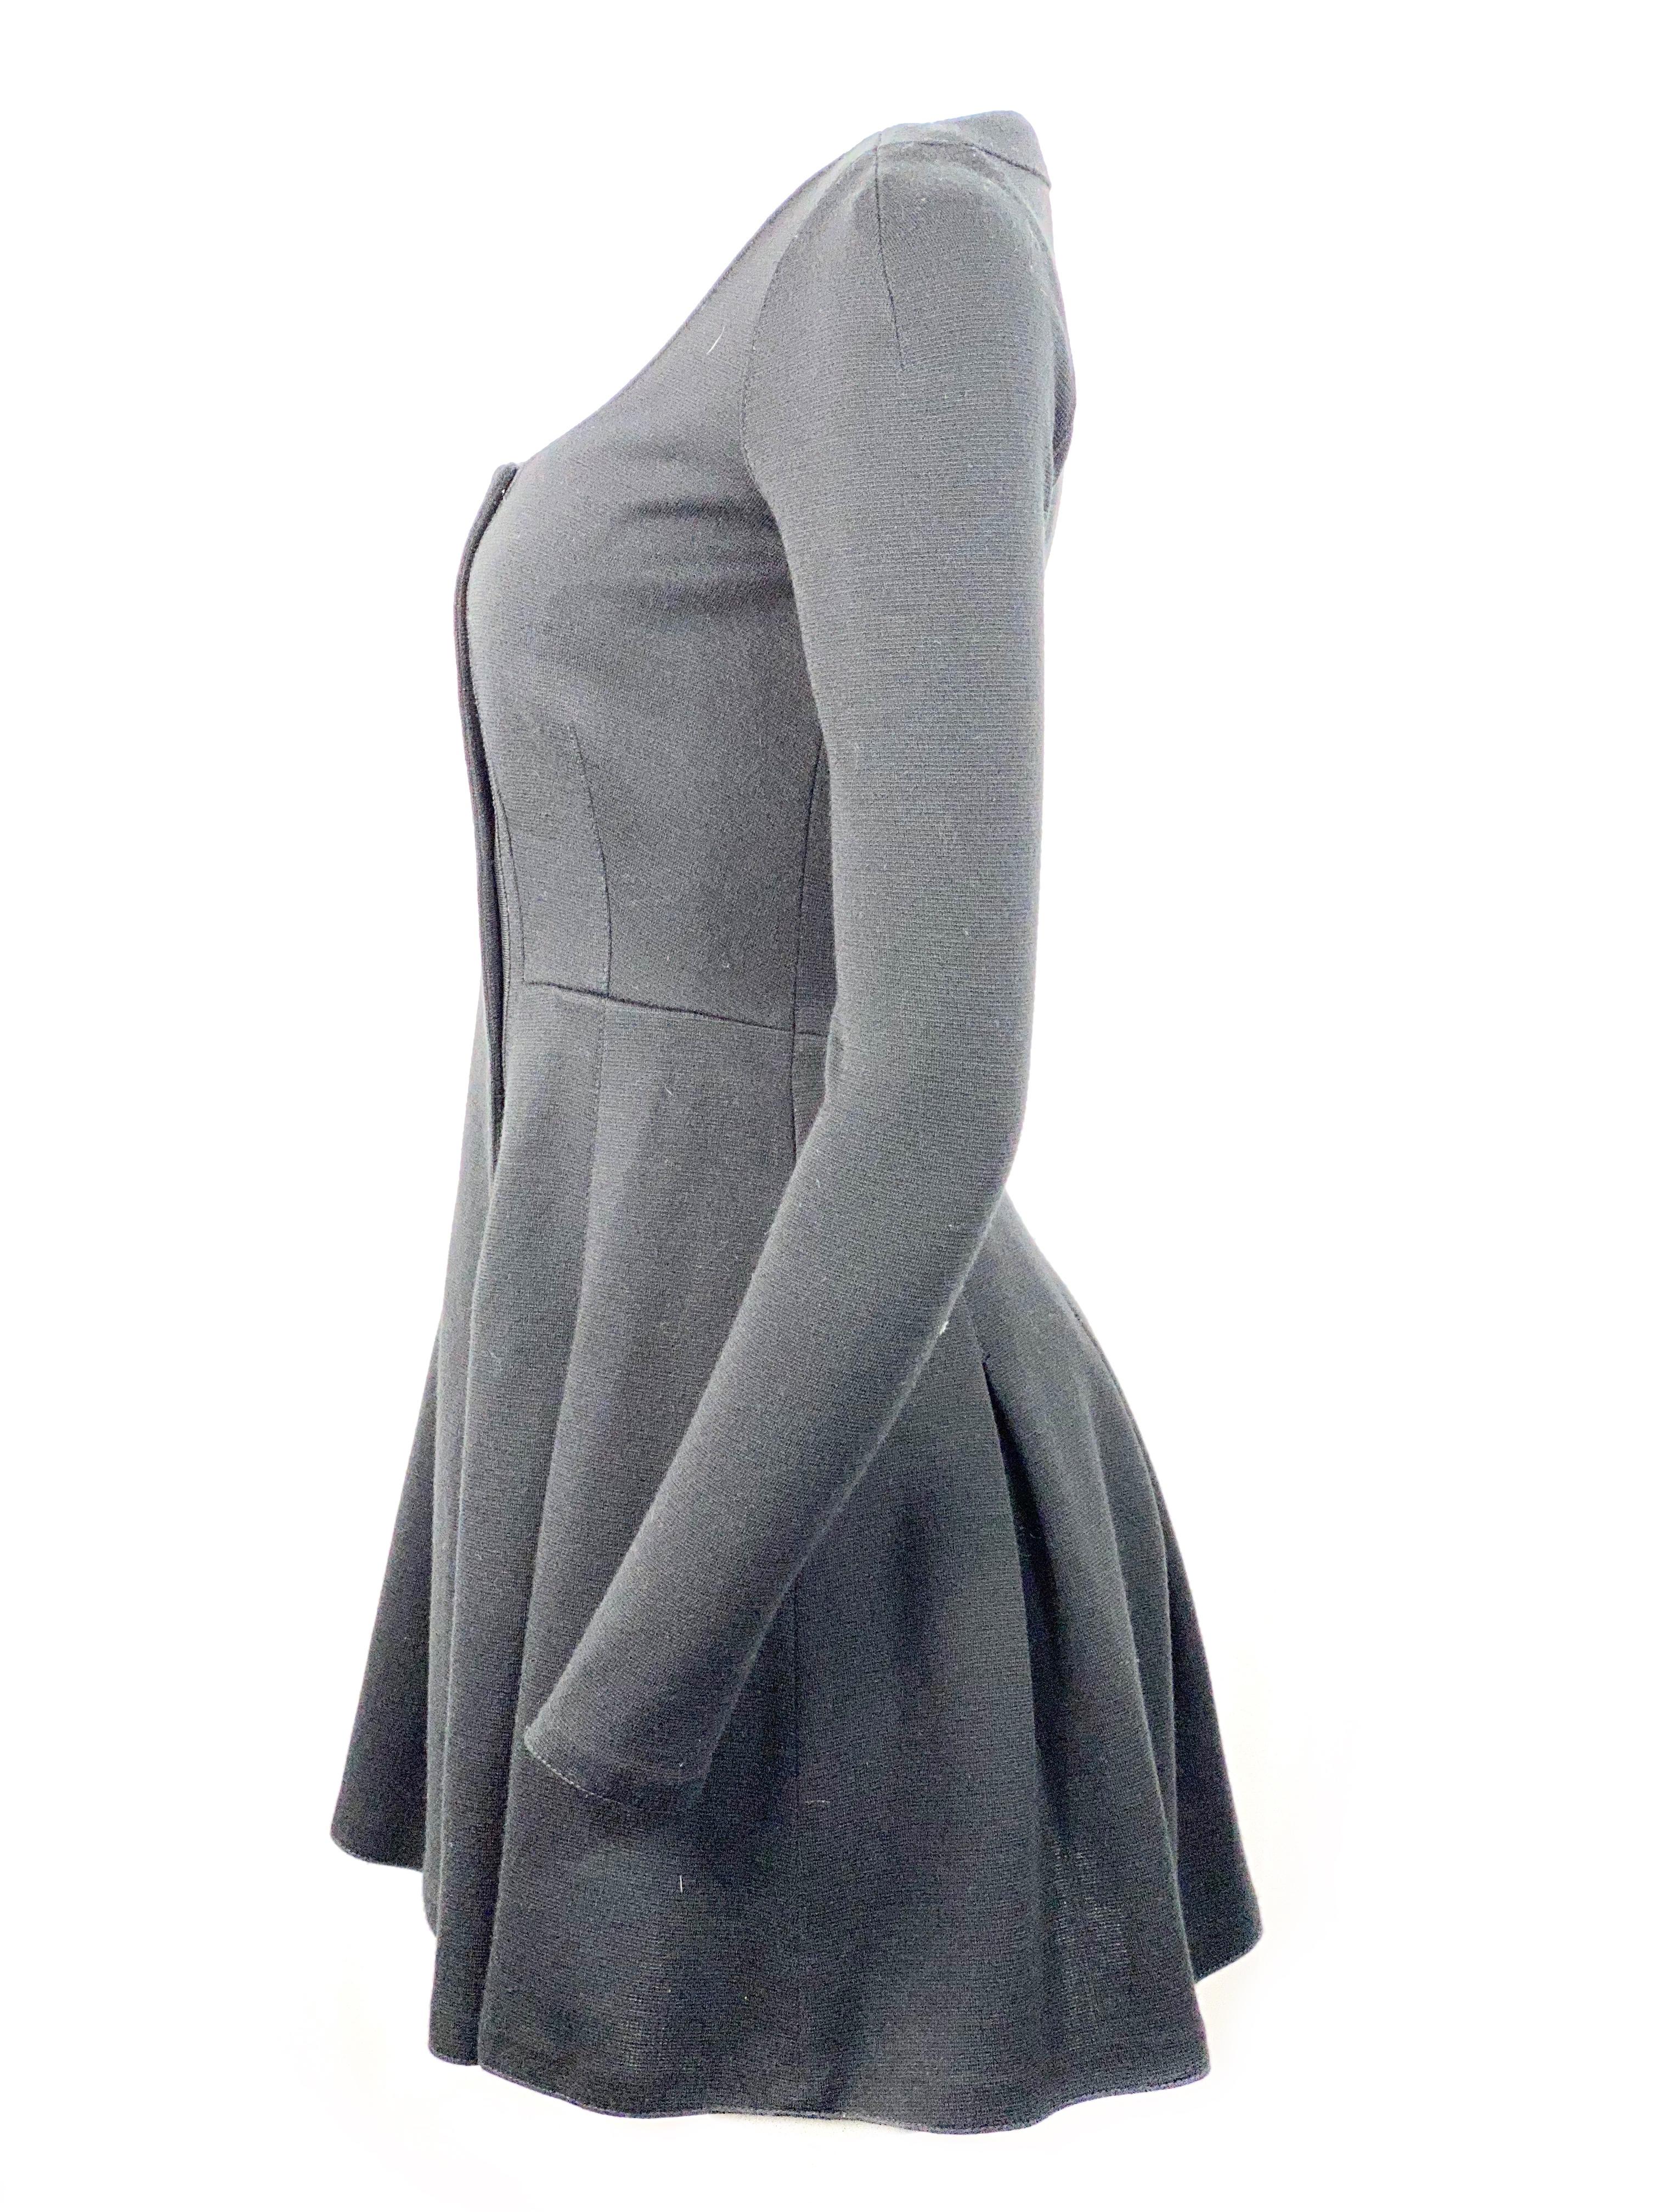 Women's Proenza Schouler Black Wool Mini Coat Dress w/ Buttons Size 4 For Sale